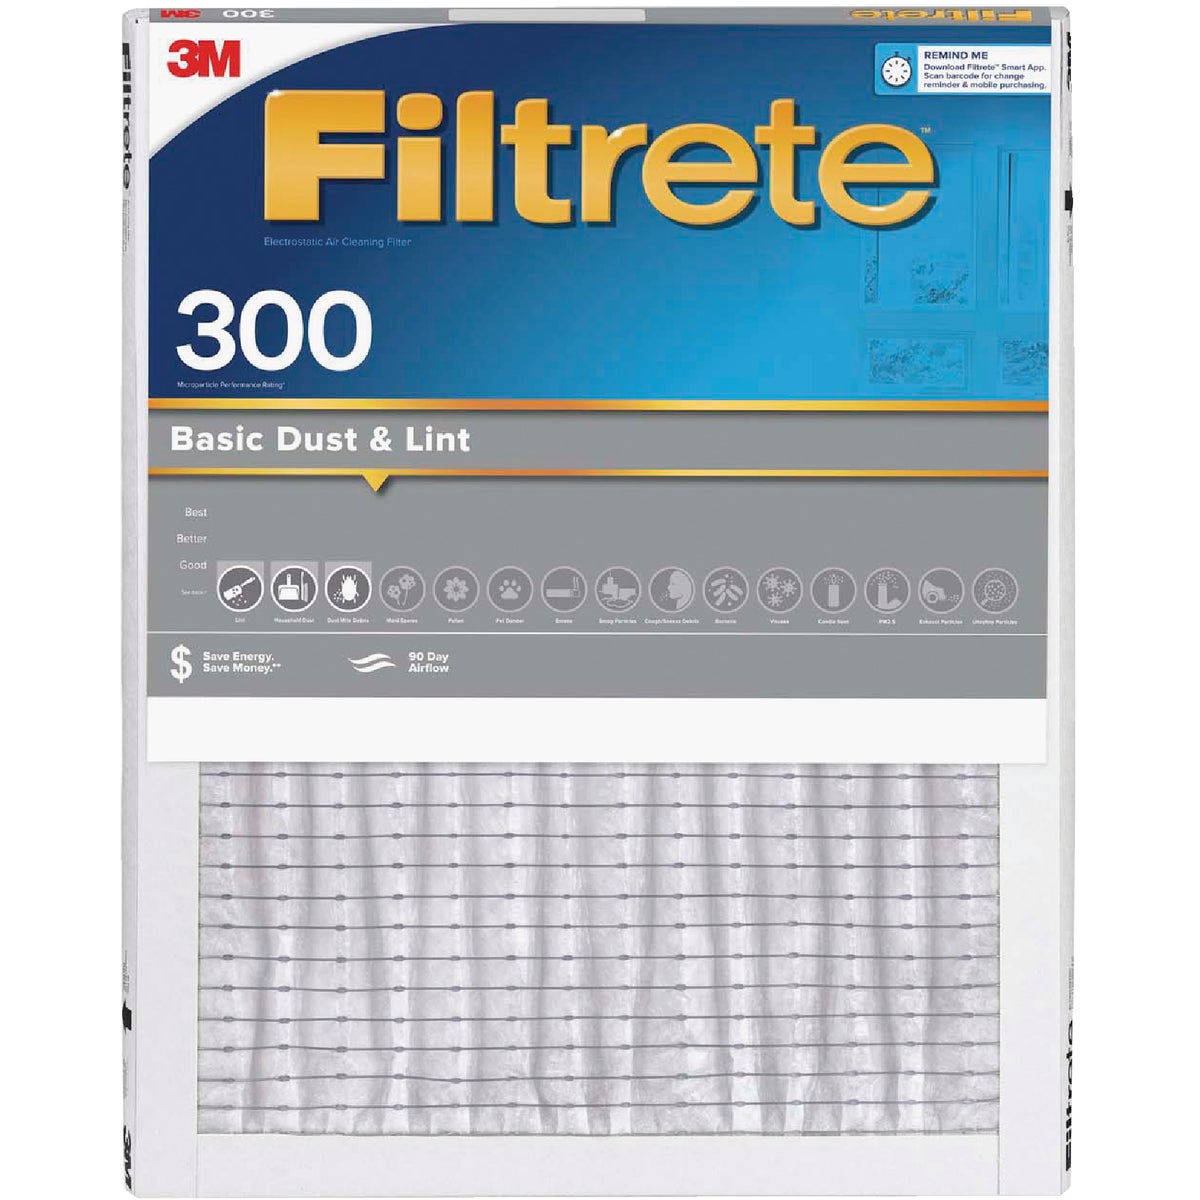 3M Filtrete 300-4 Filtrete 16 In. x 20 In. x 1 In. 300 MPR Basic Dust & Lint Furnace Filter, MERV 5 300-4 Pack of 4